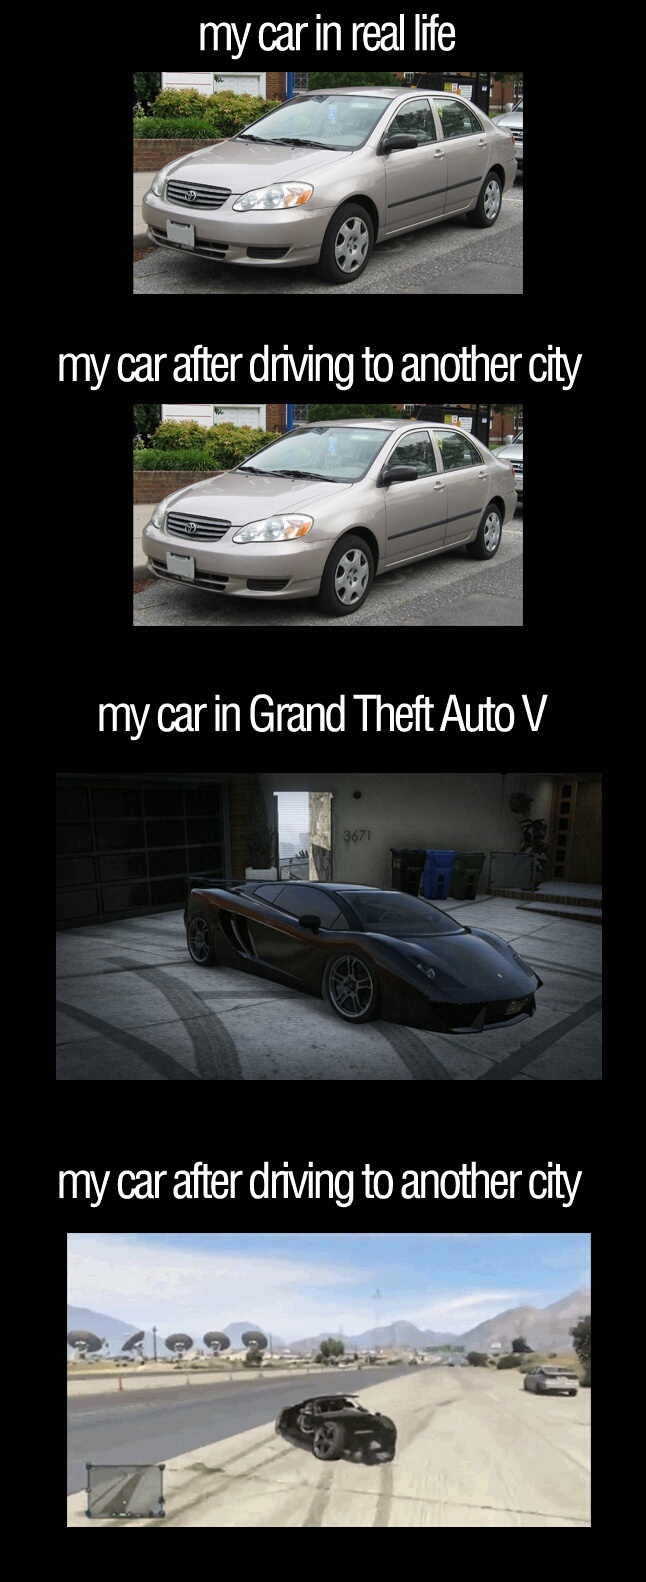 I wish I had that car in real life... - meme